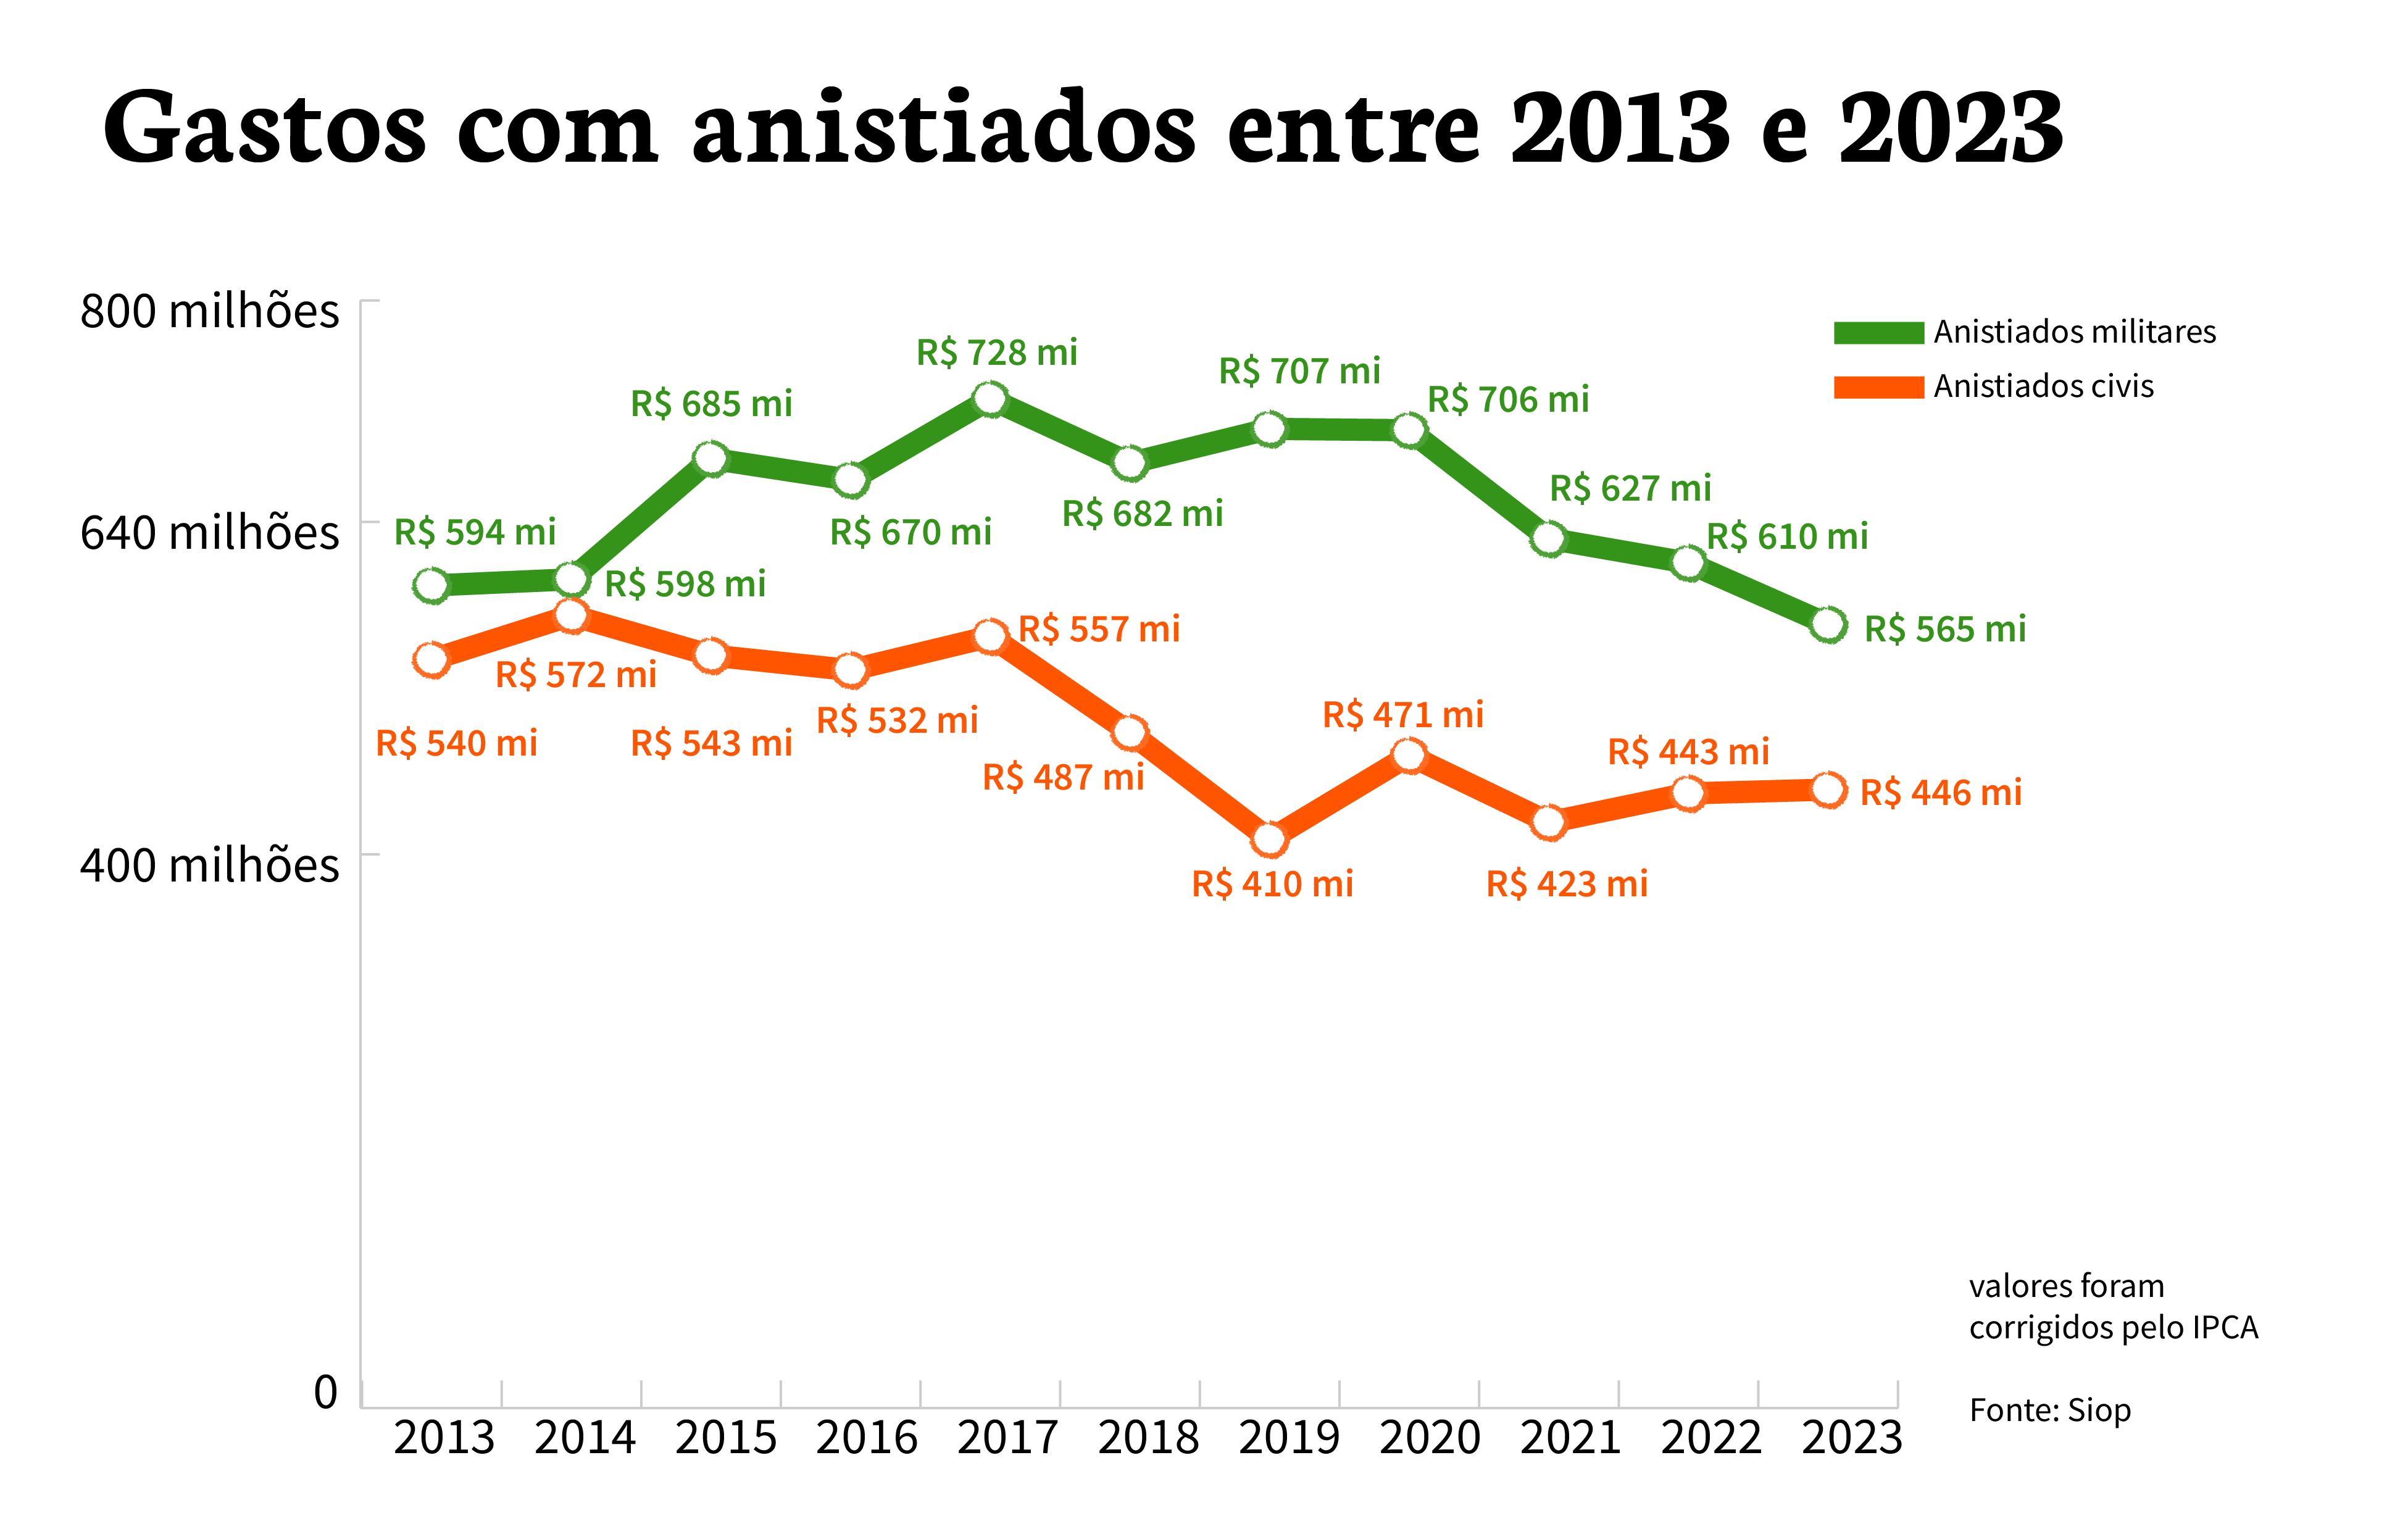 Gráfico mostra valores pagos a anistiados civis e militares entre 2013 e 2023